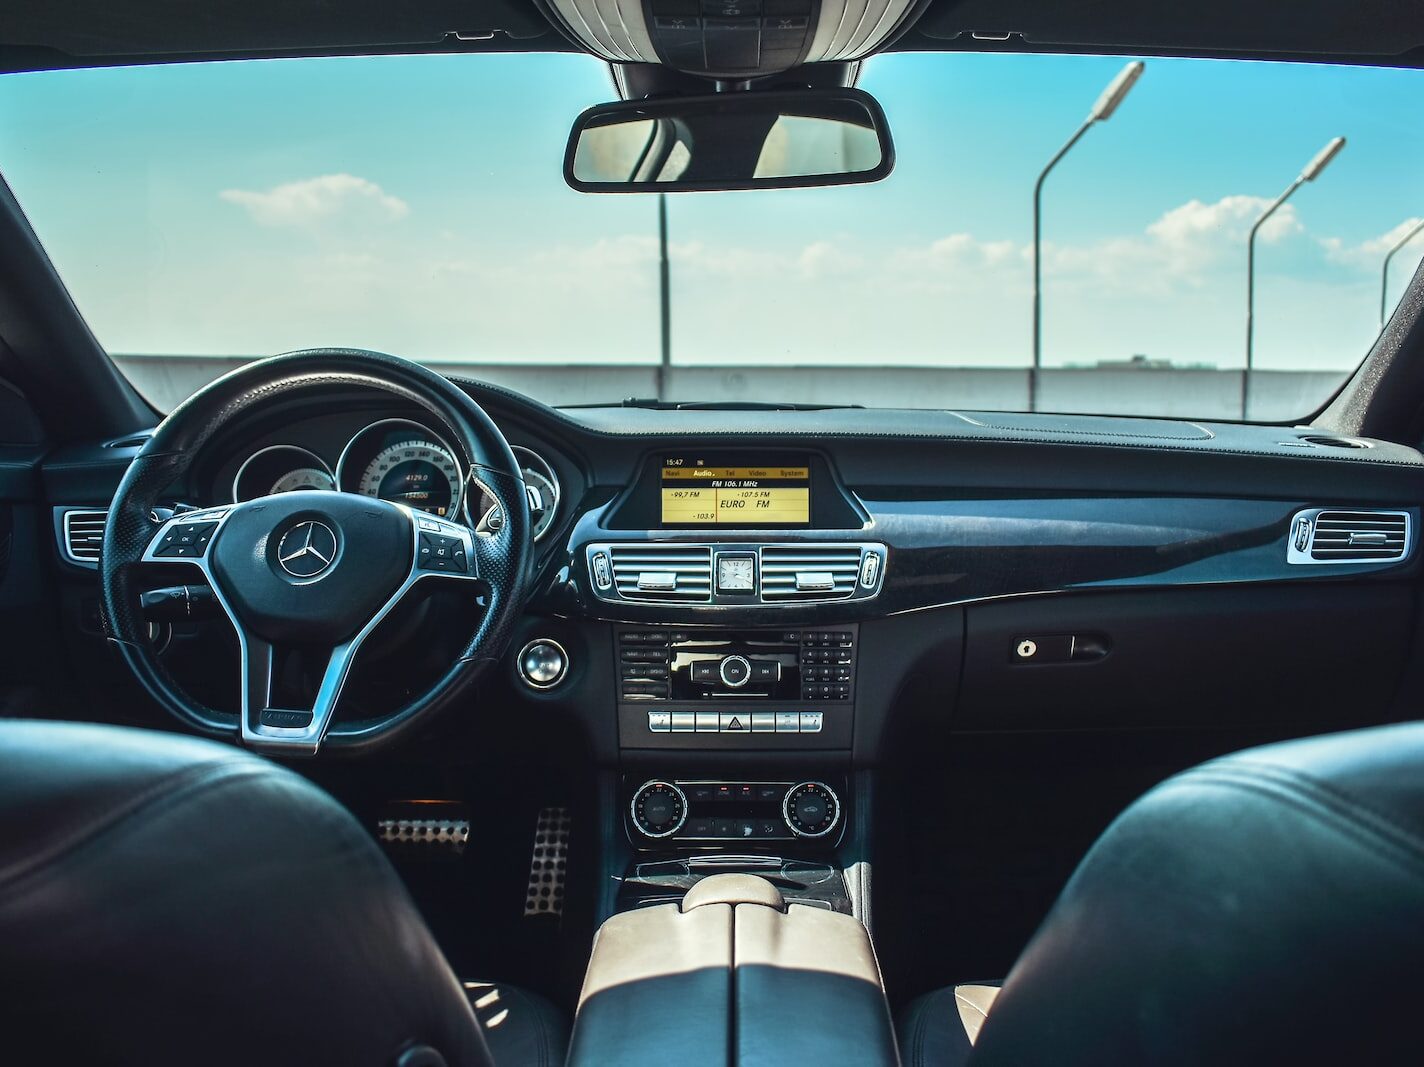 black Mercedes-Benz vehicle steering wheel